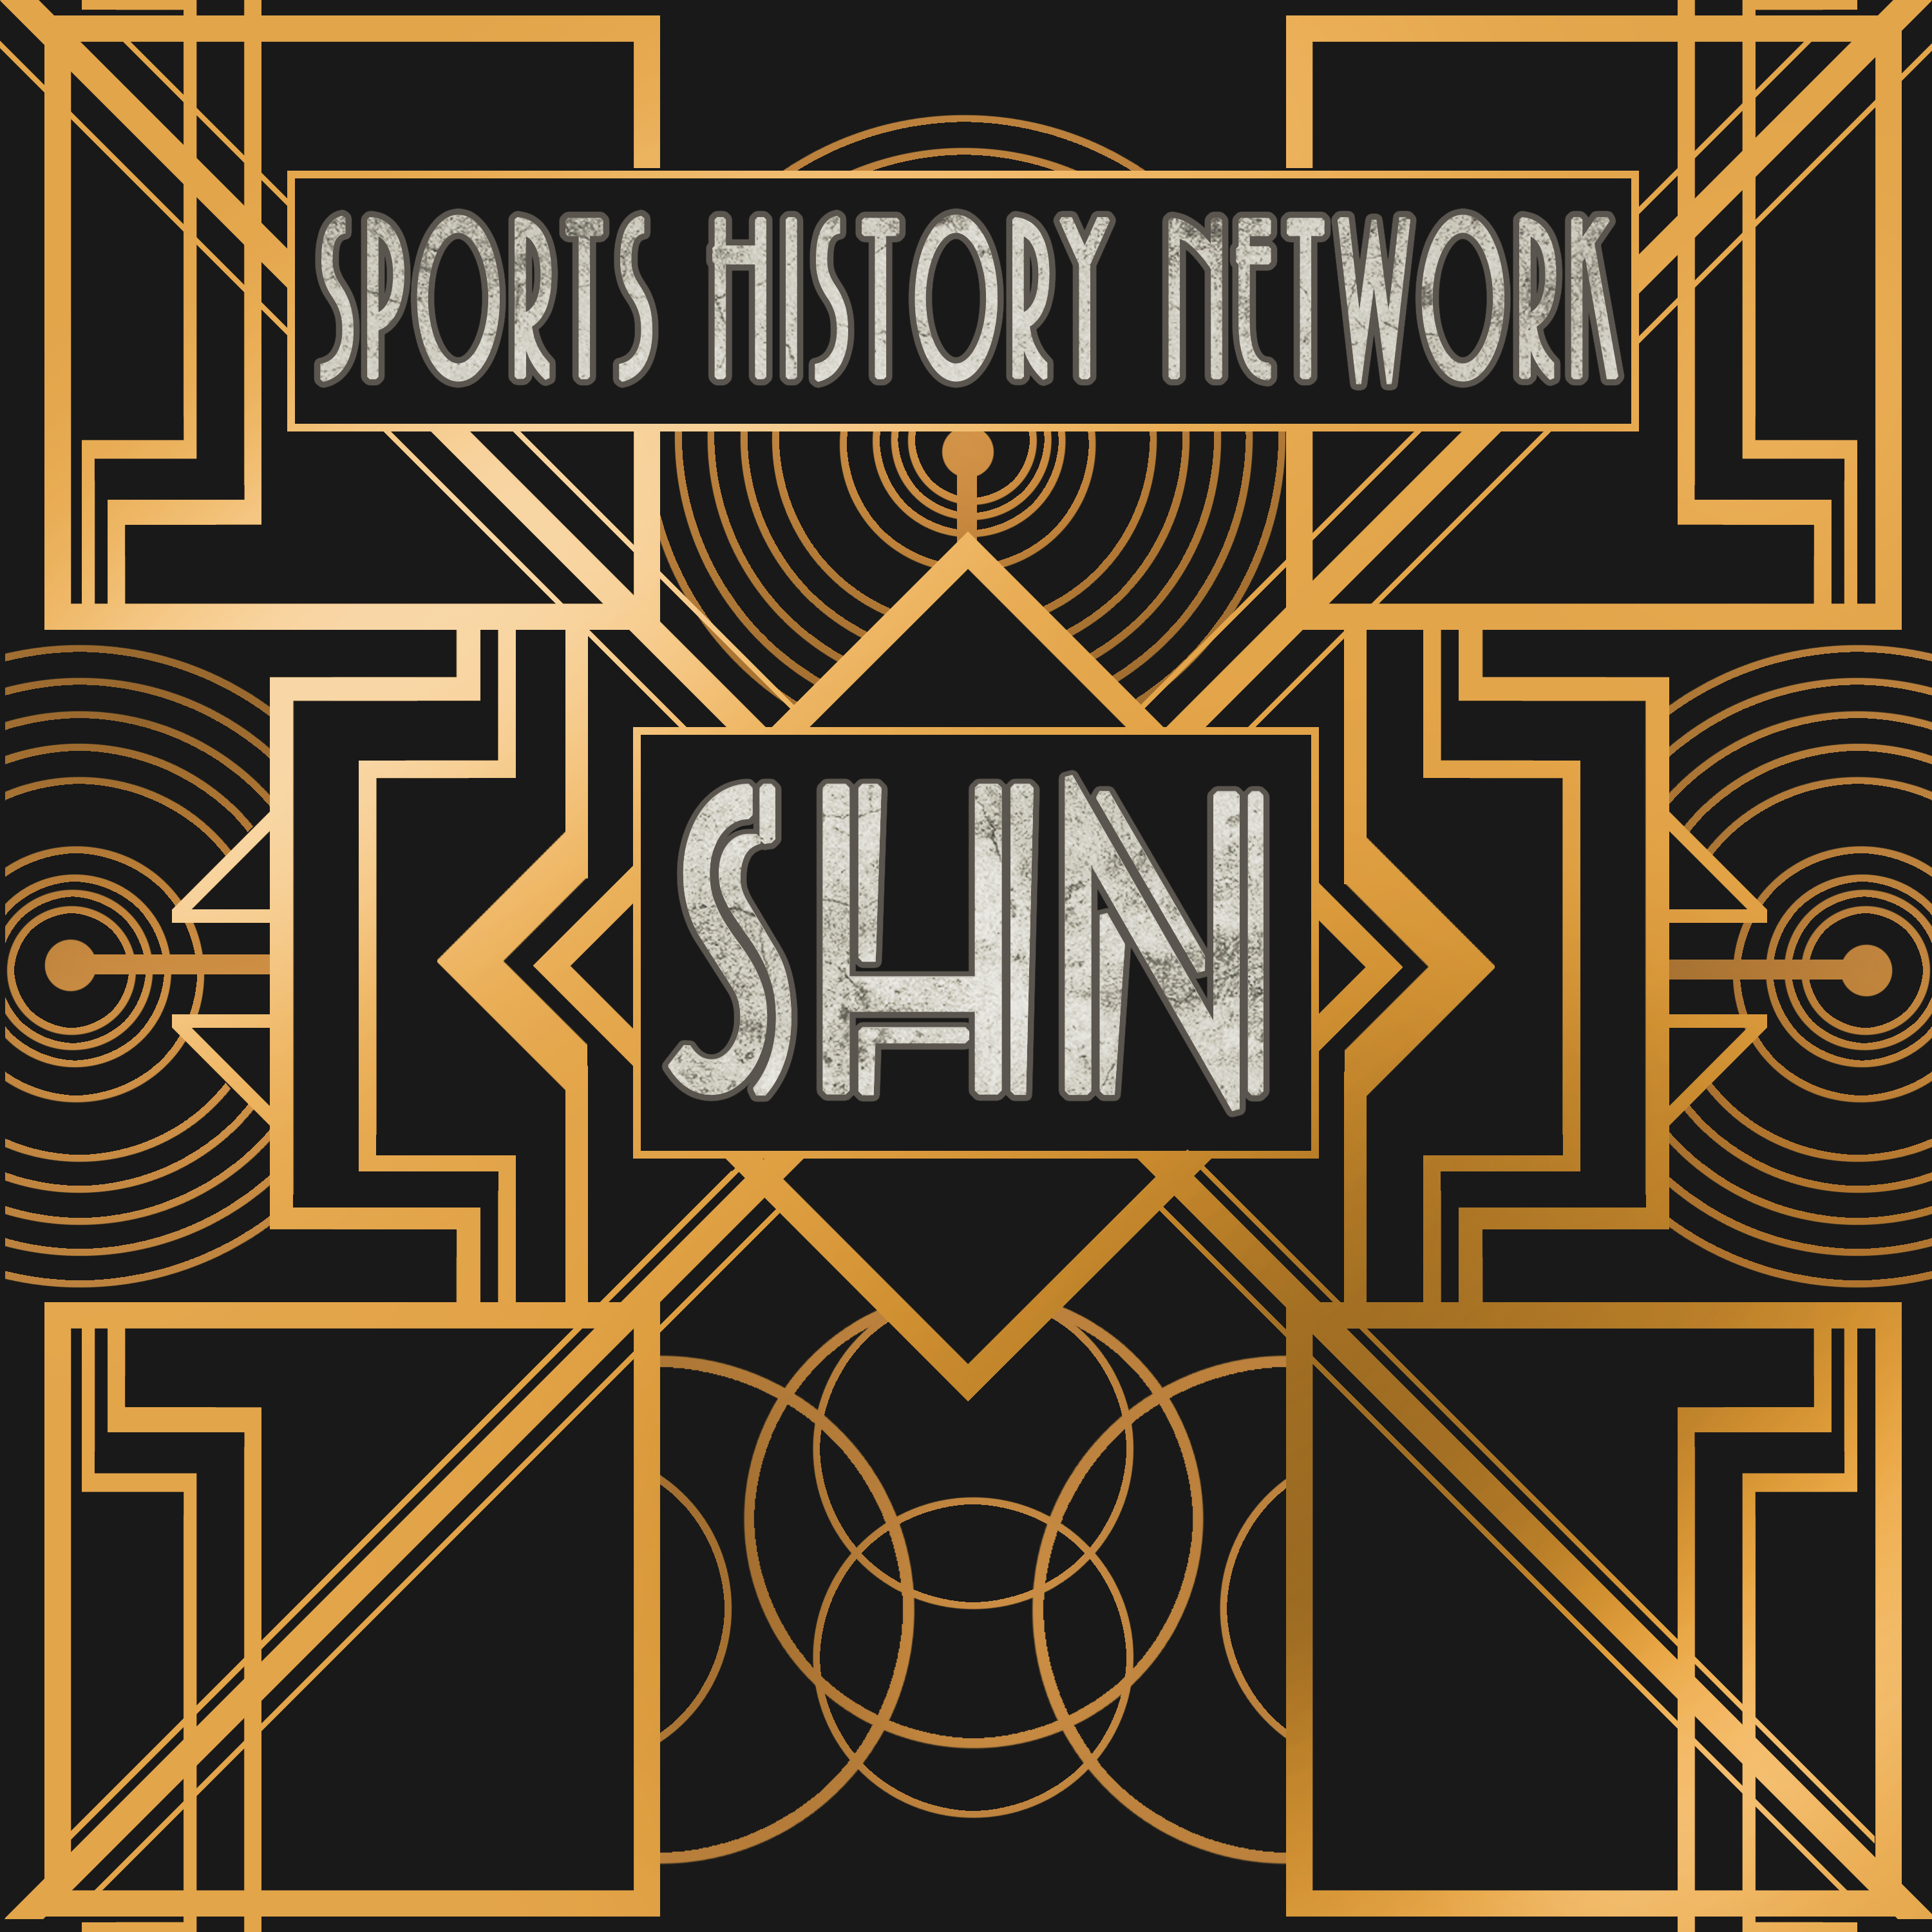 Sports History Network